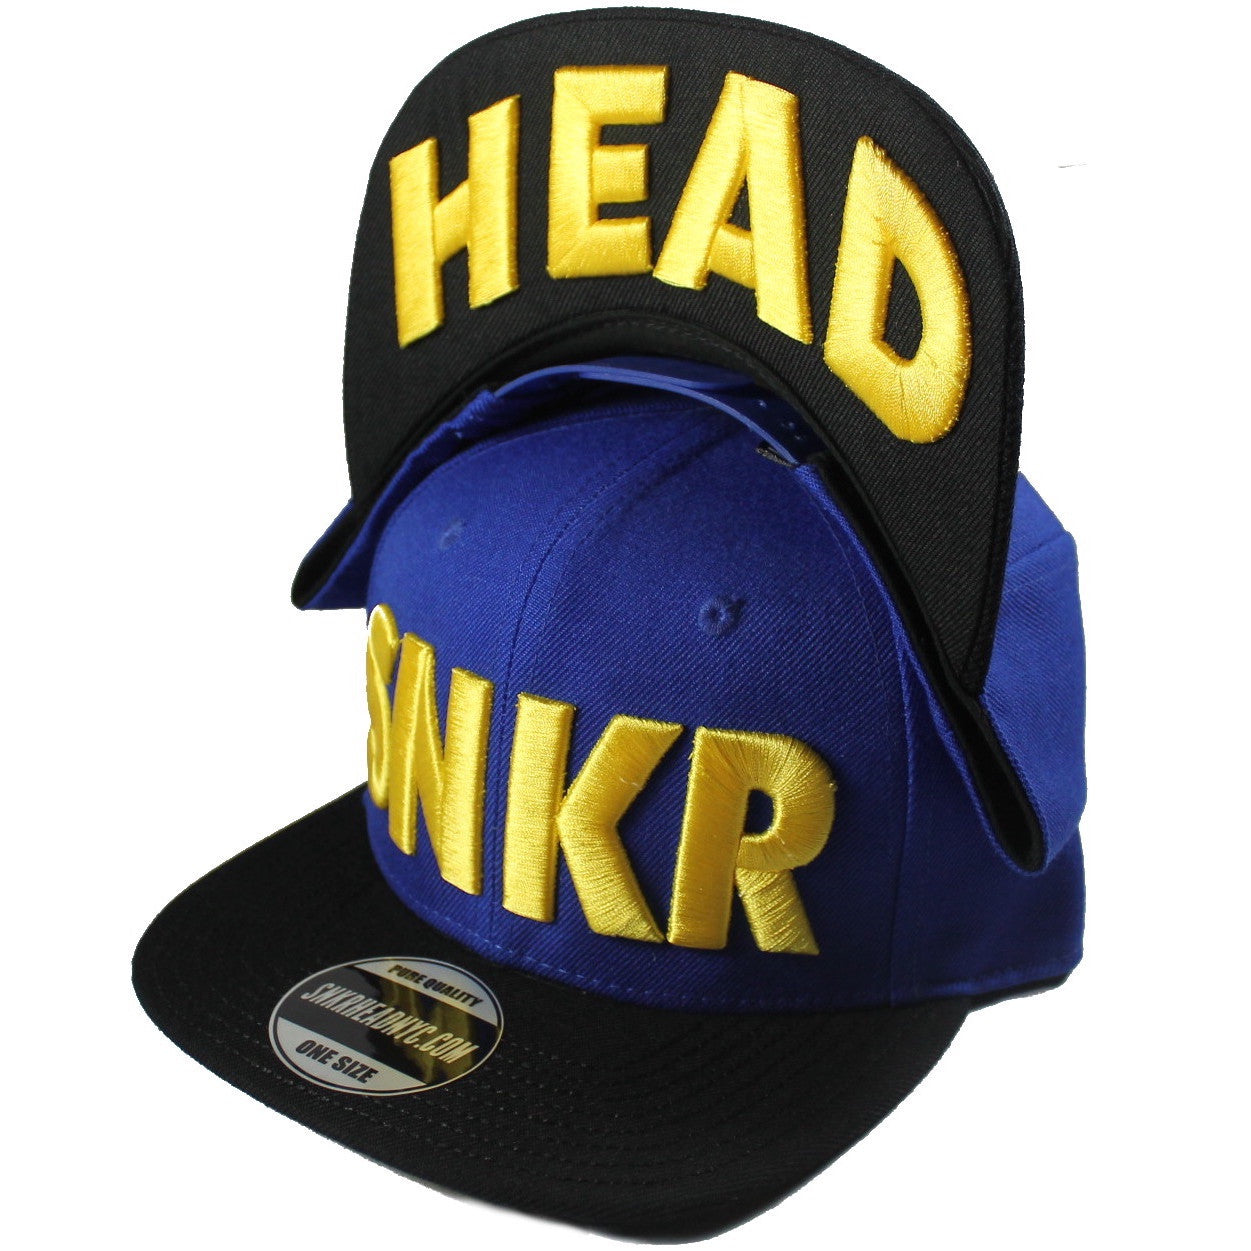 SNKR HEAD Blue/Yellow Snapback Hat